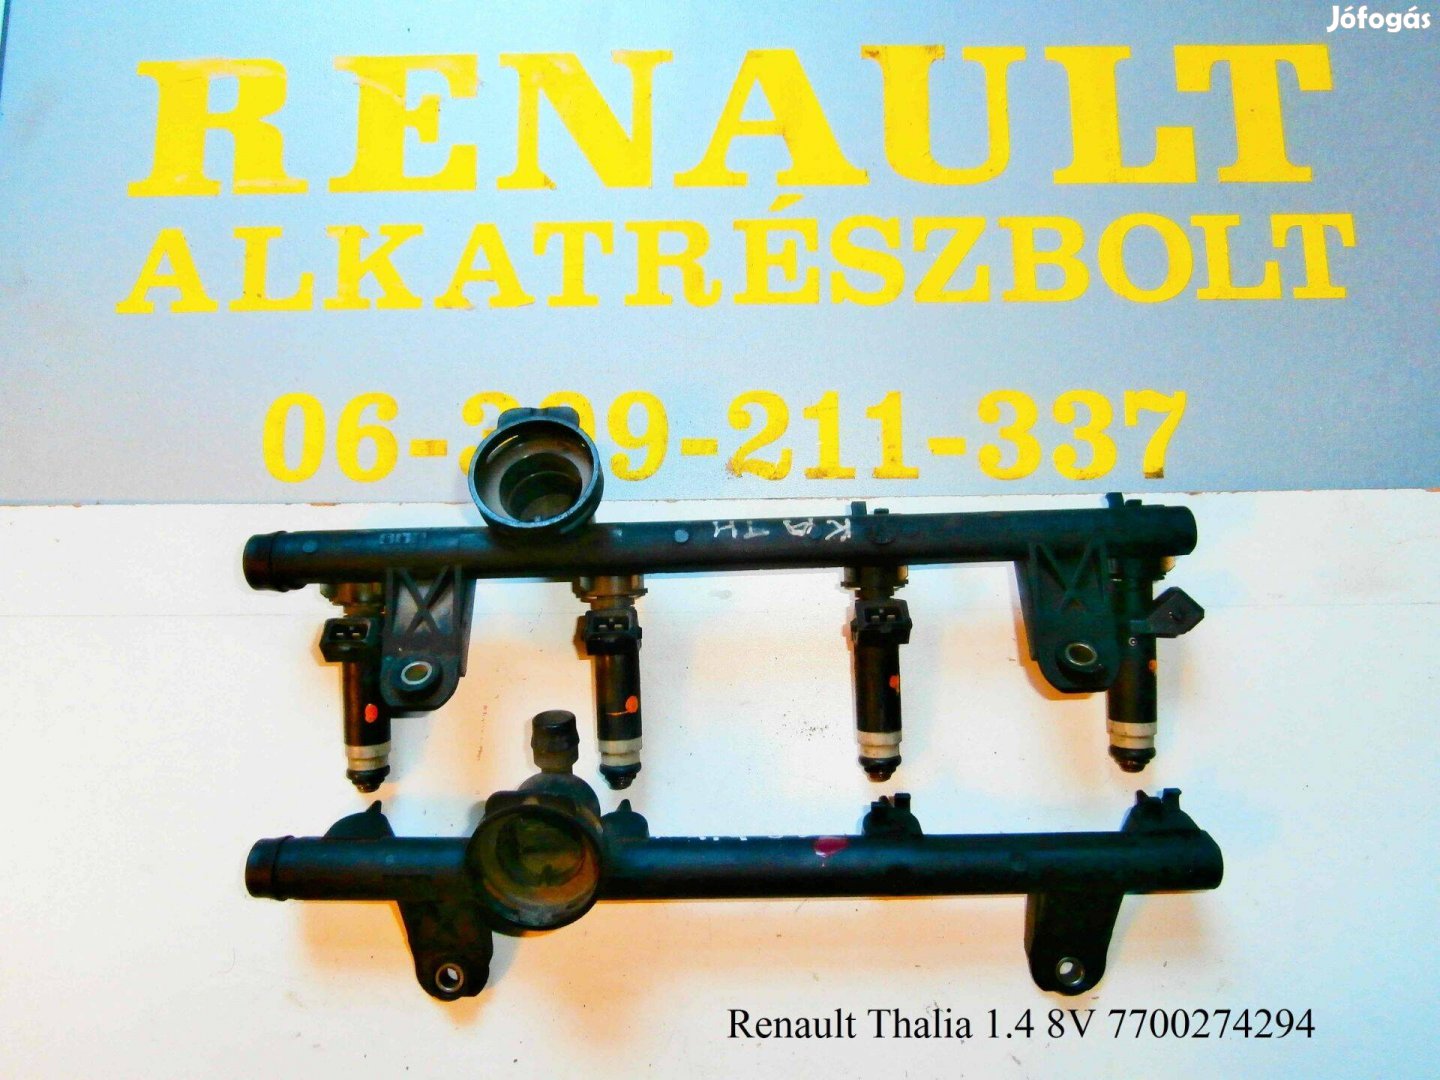 Renault Thalia 1.4 8V 7700274294 injektor, injektor híd